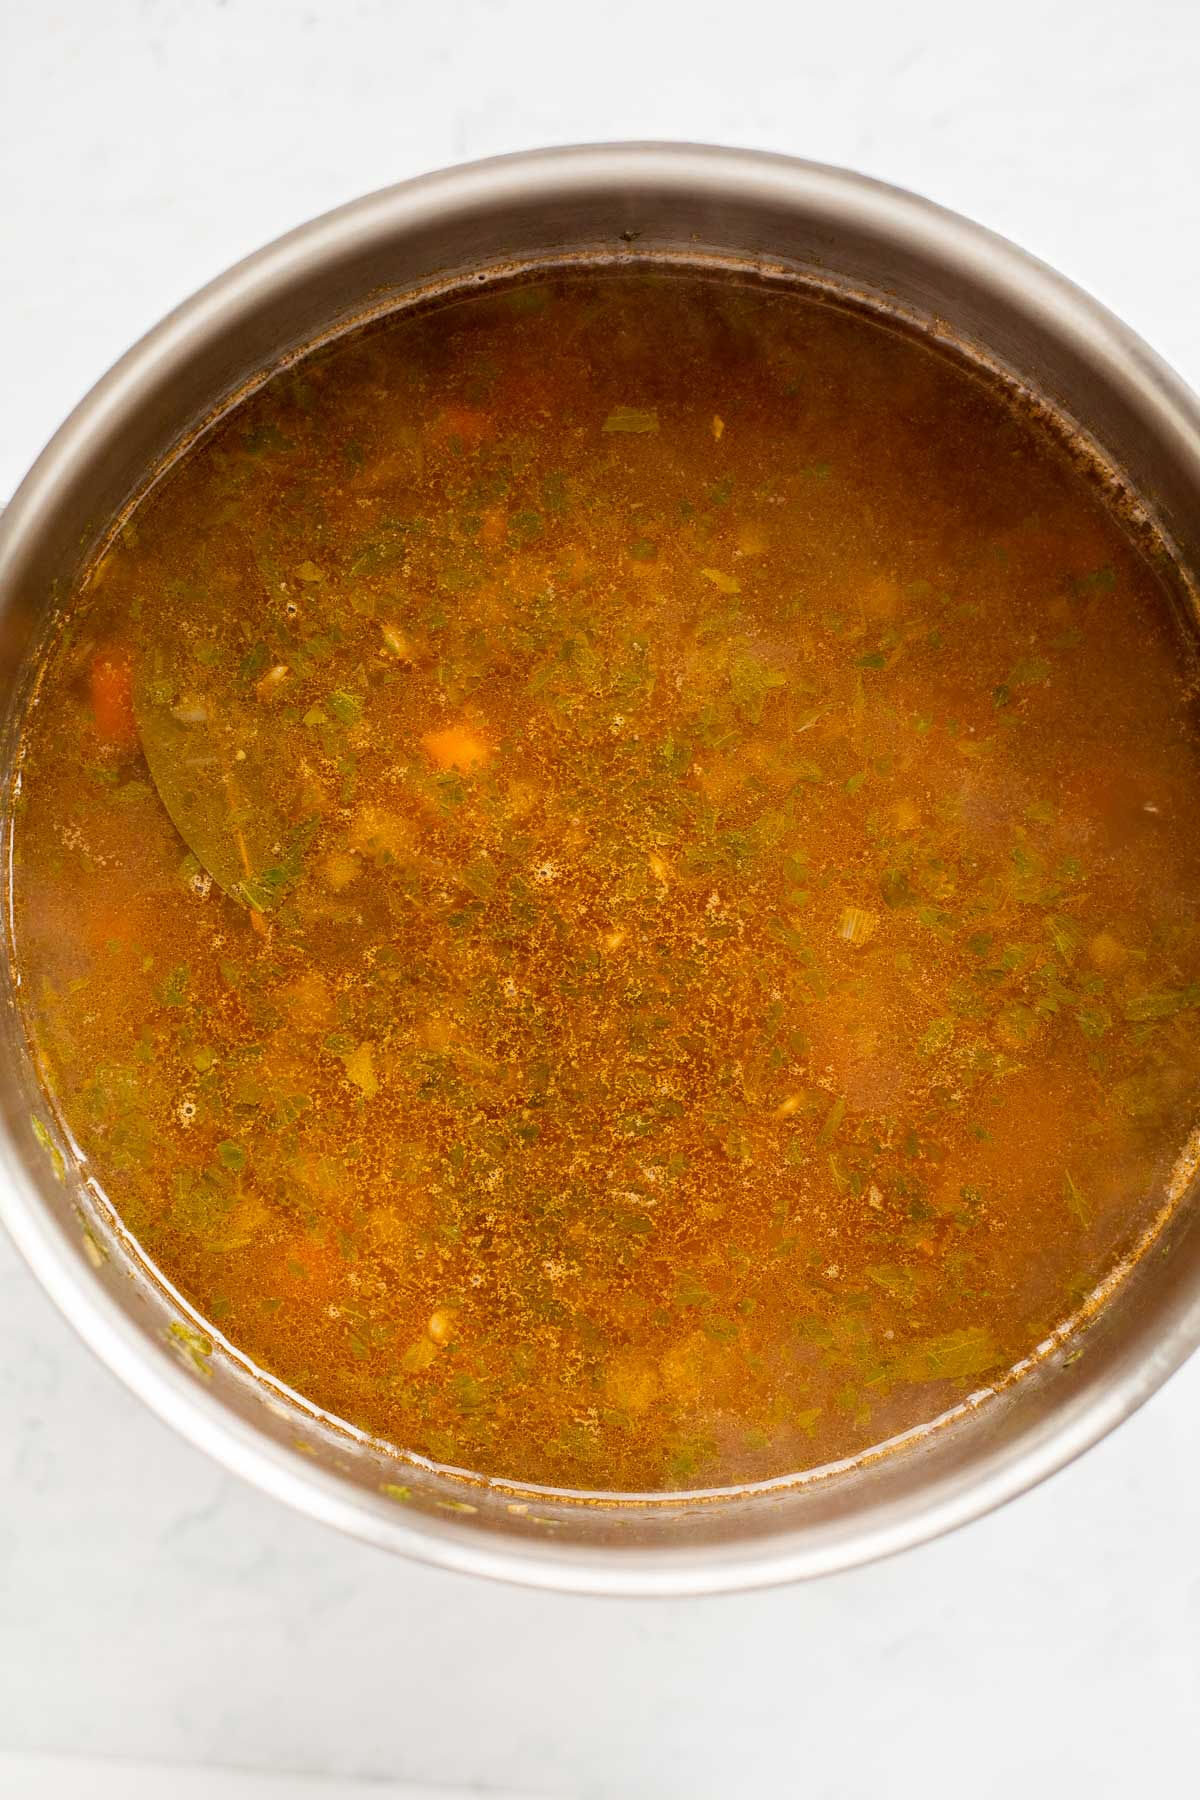 Broth in a stock pot for Greek lentil soup.